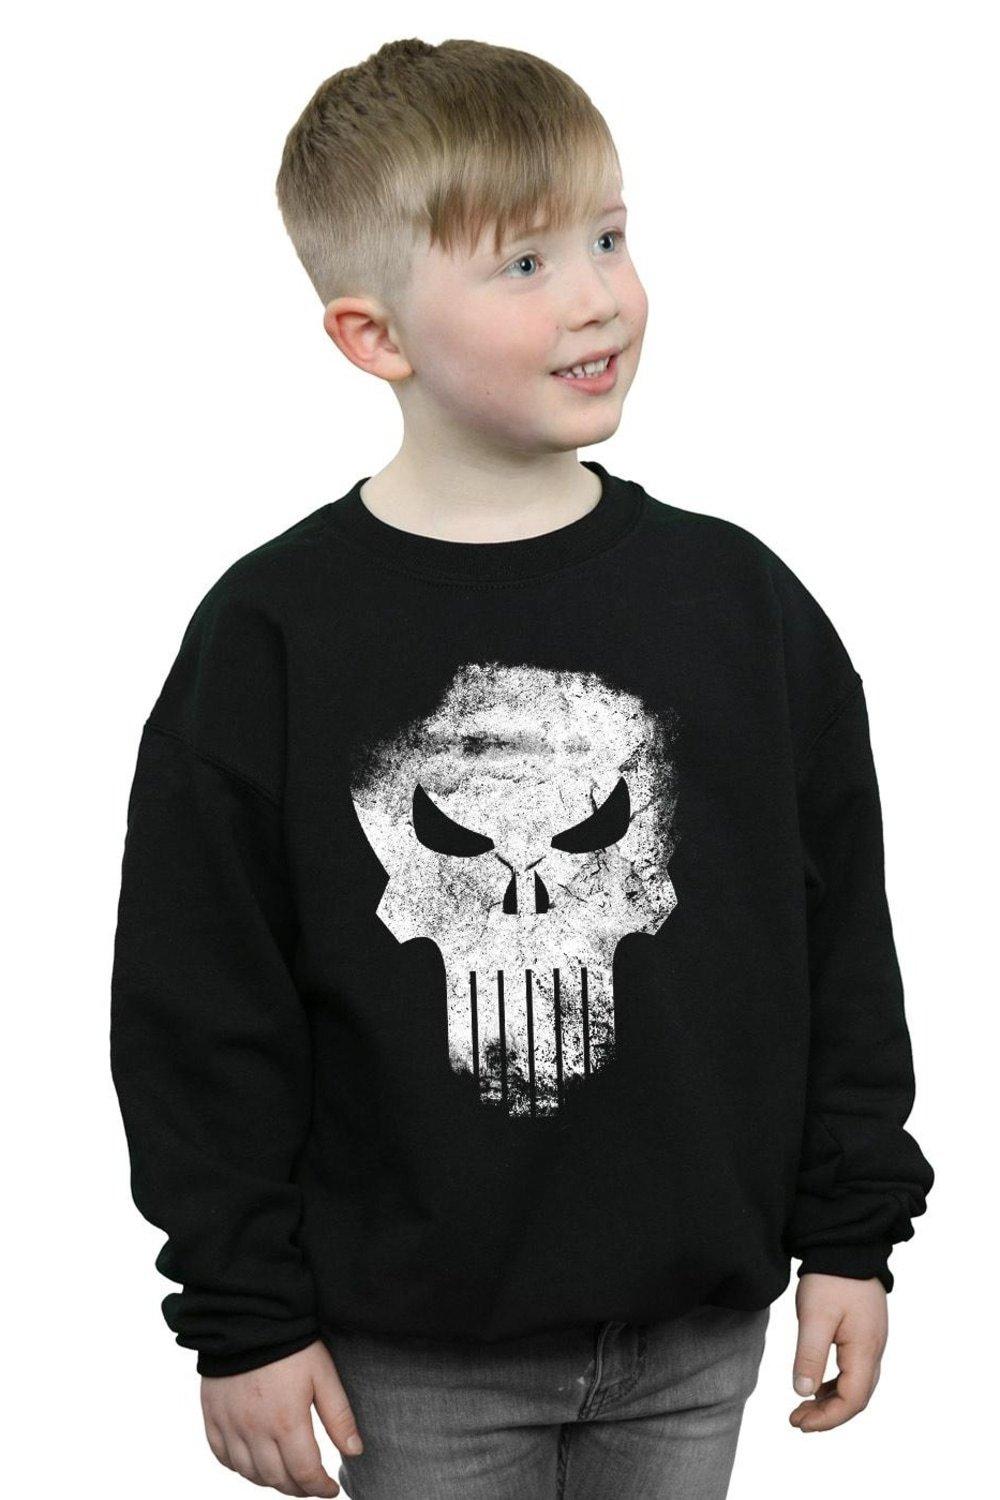 The Punisher Distrressed Skull Sweatshirt